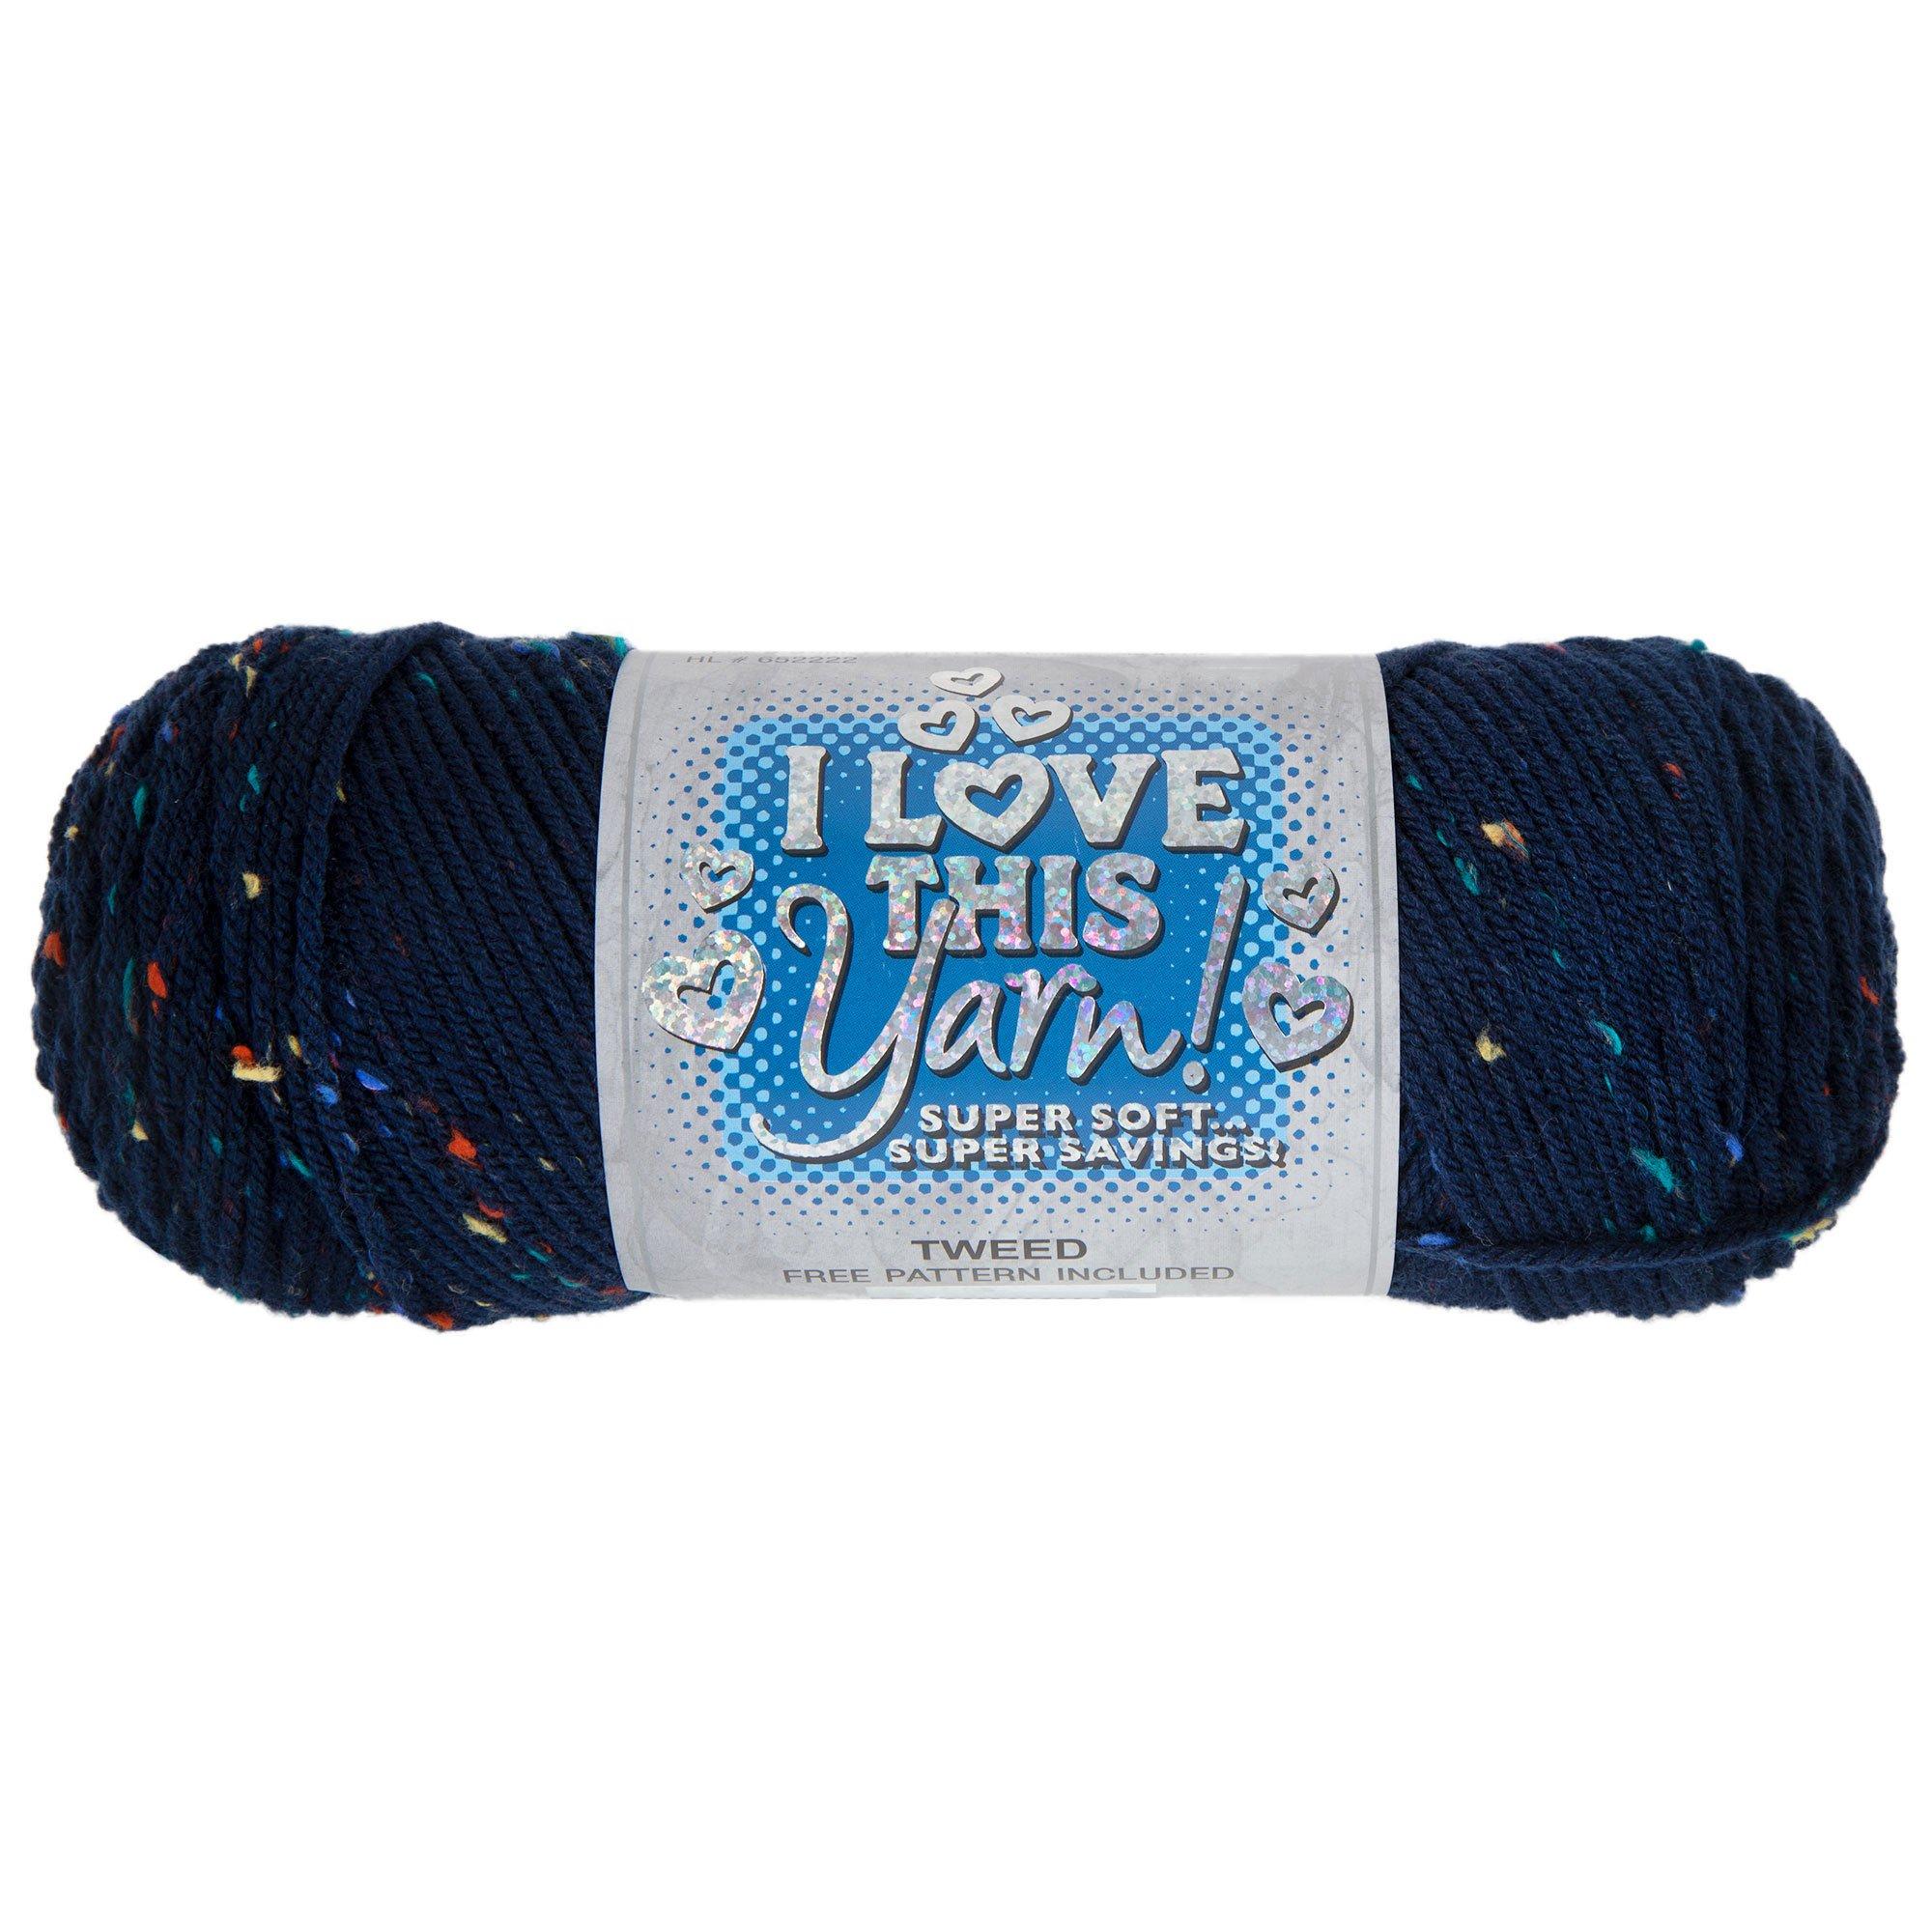 I Love This Yarn! Super Soft Acrylic Medium Weight Yarn - 1 Skein Navy #90